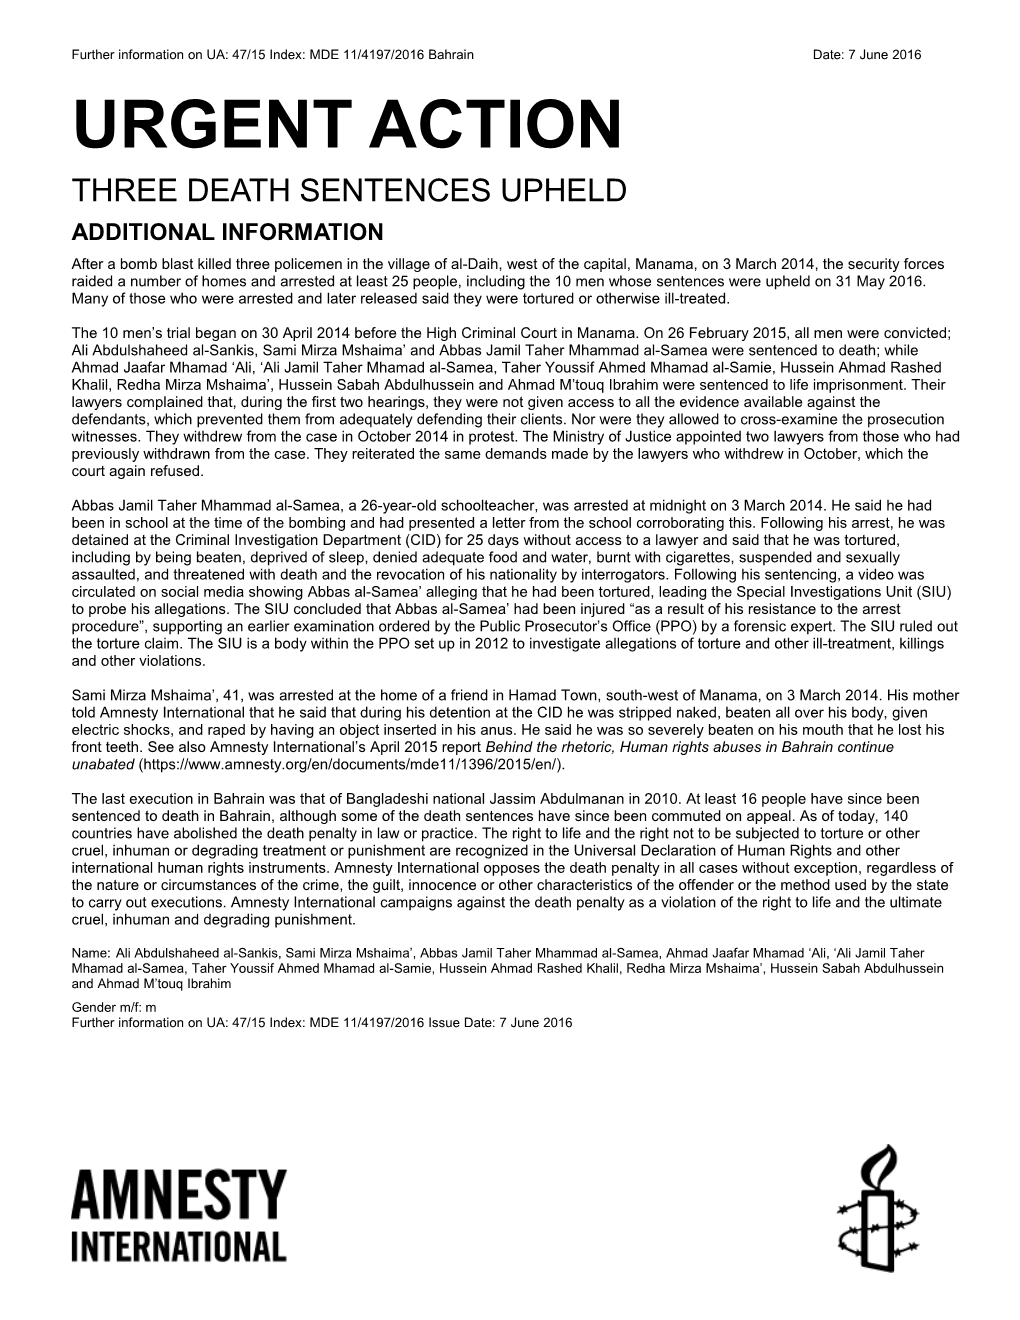 Three Death Sentences Upheld